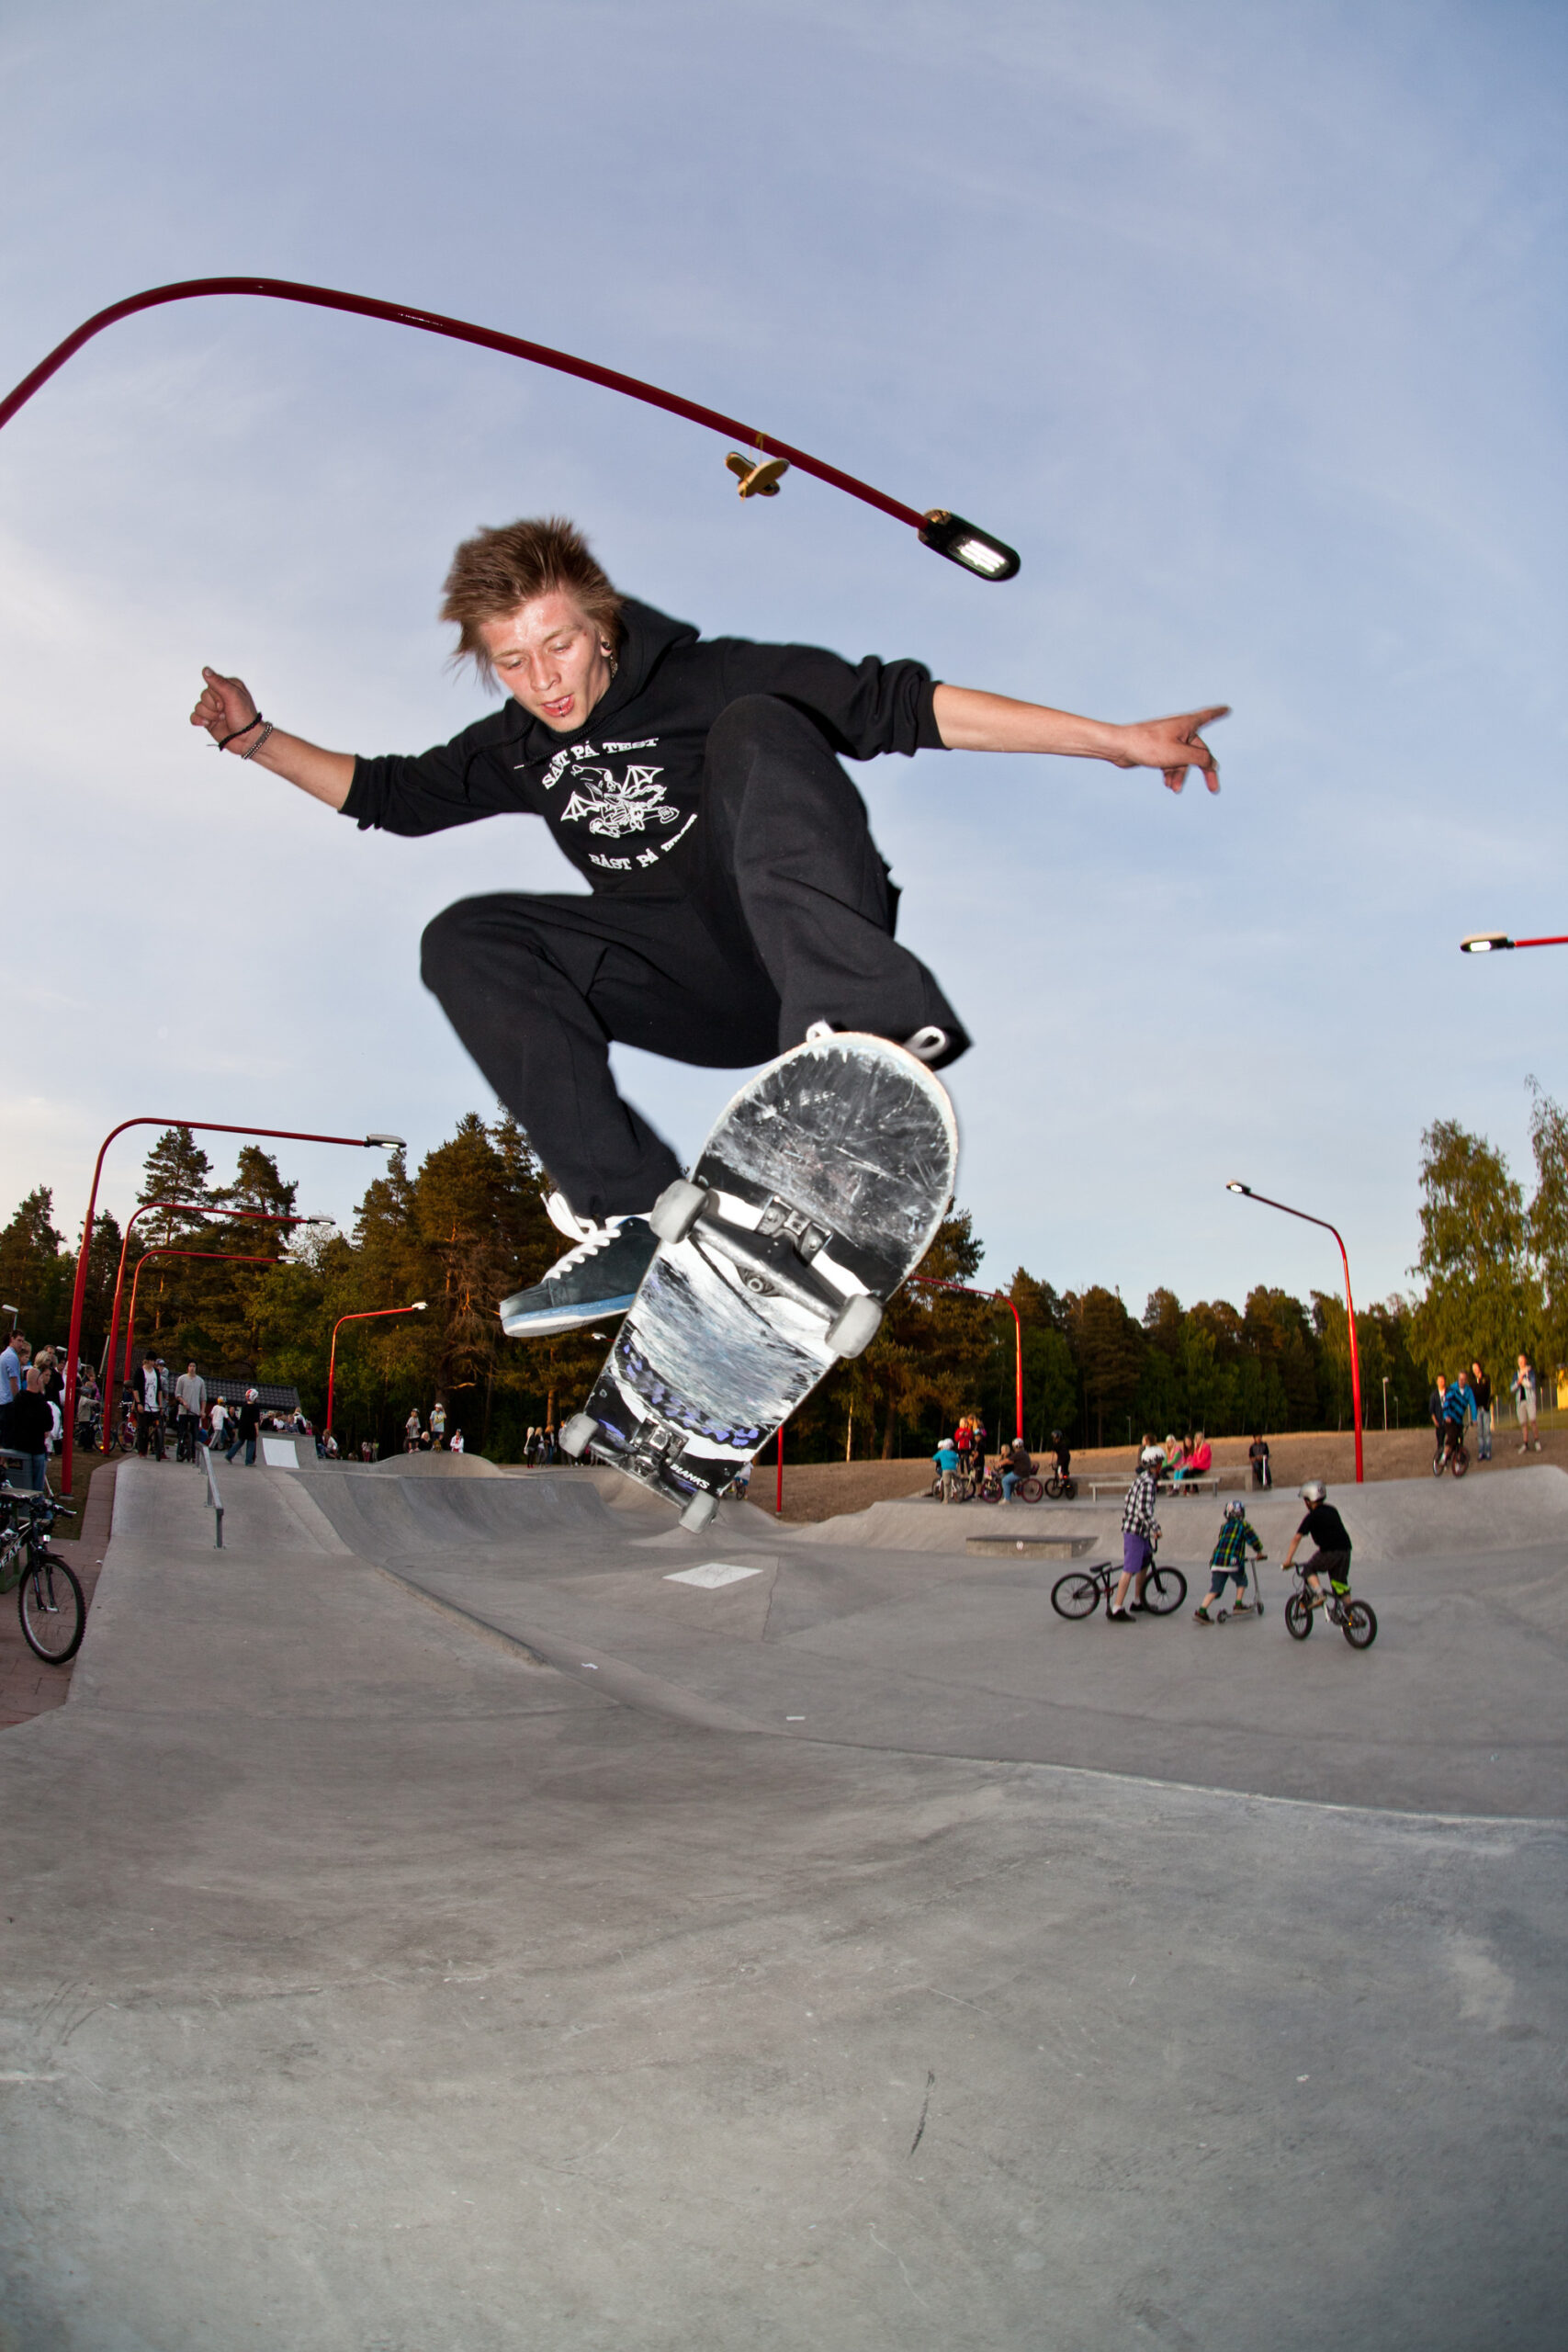 Faceplant Skateboard Tibro